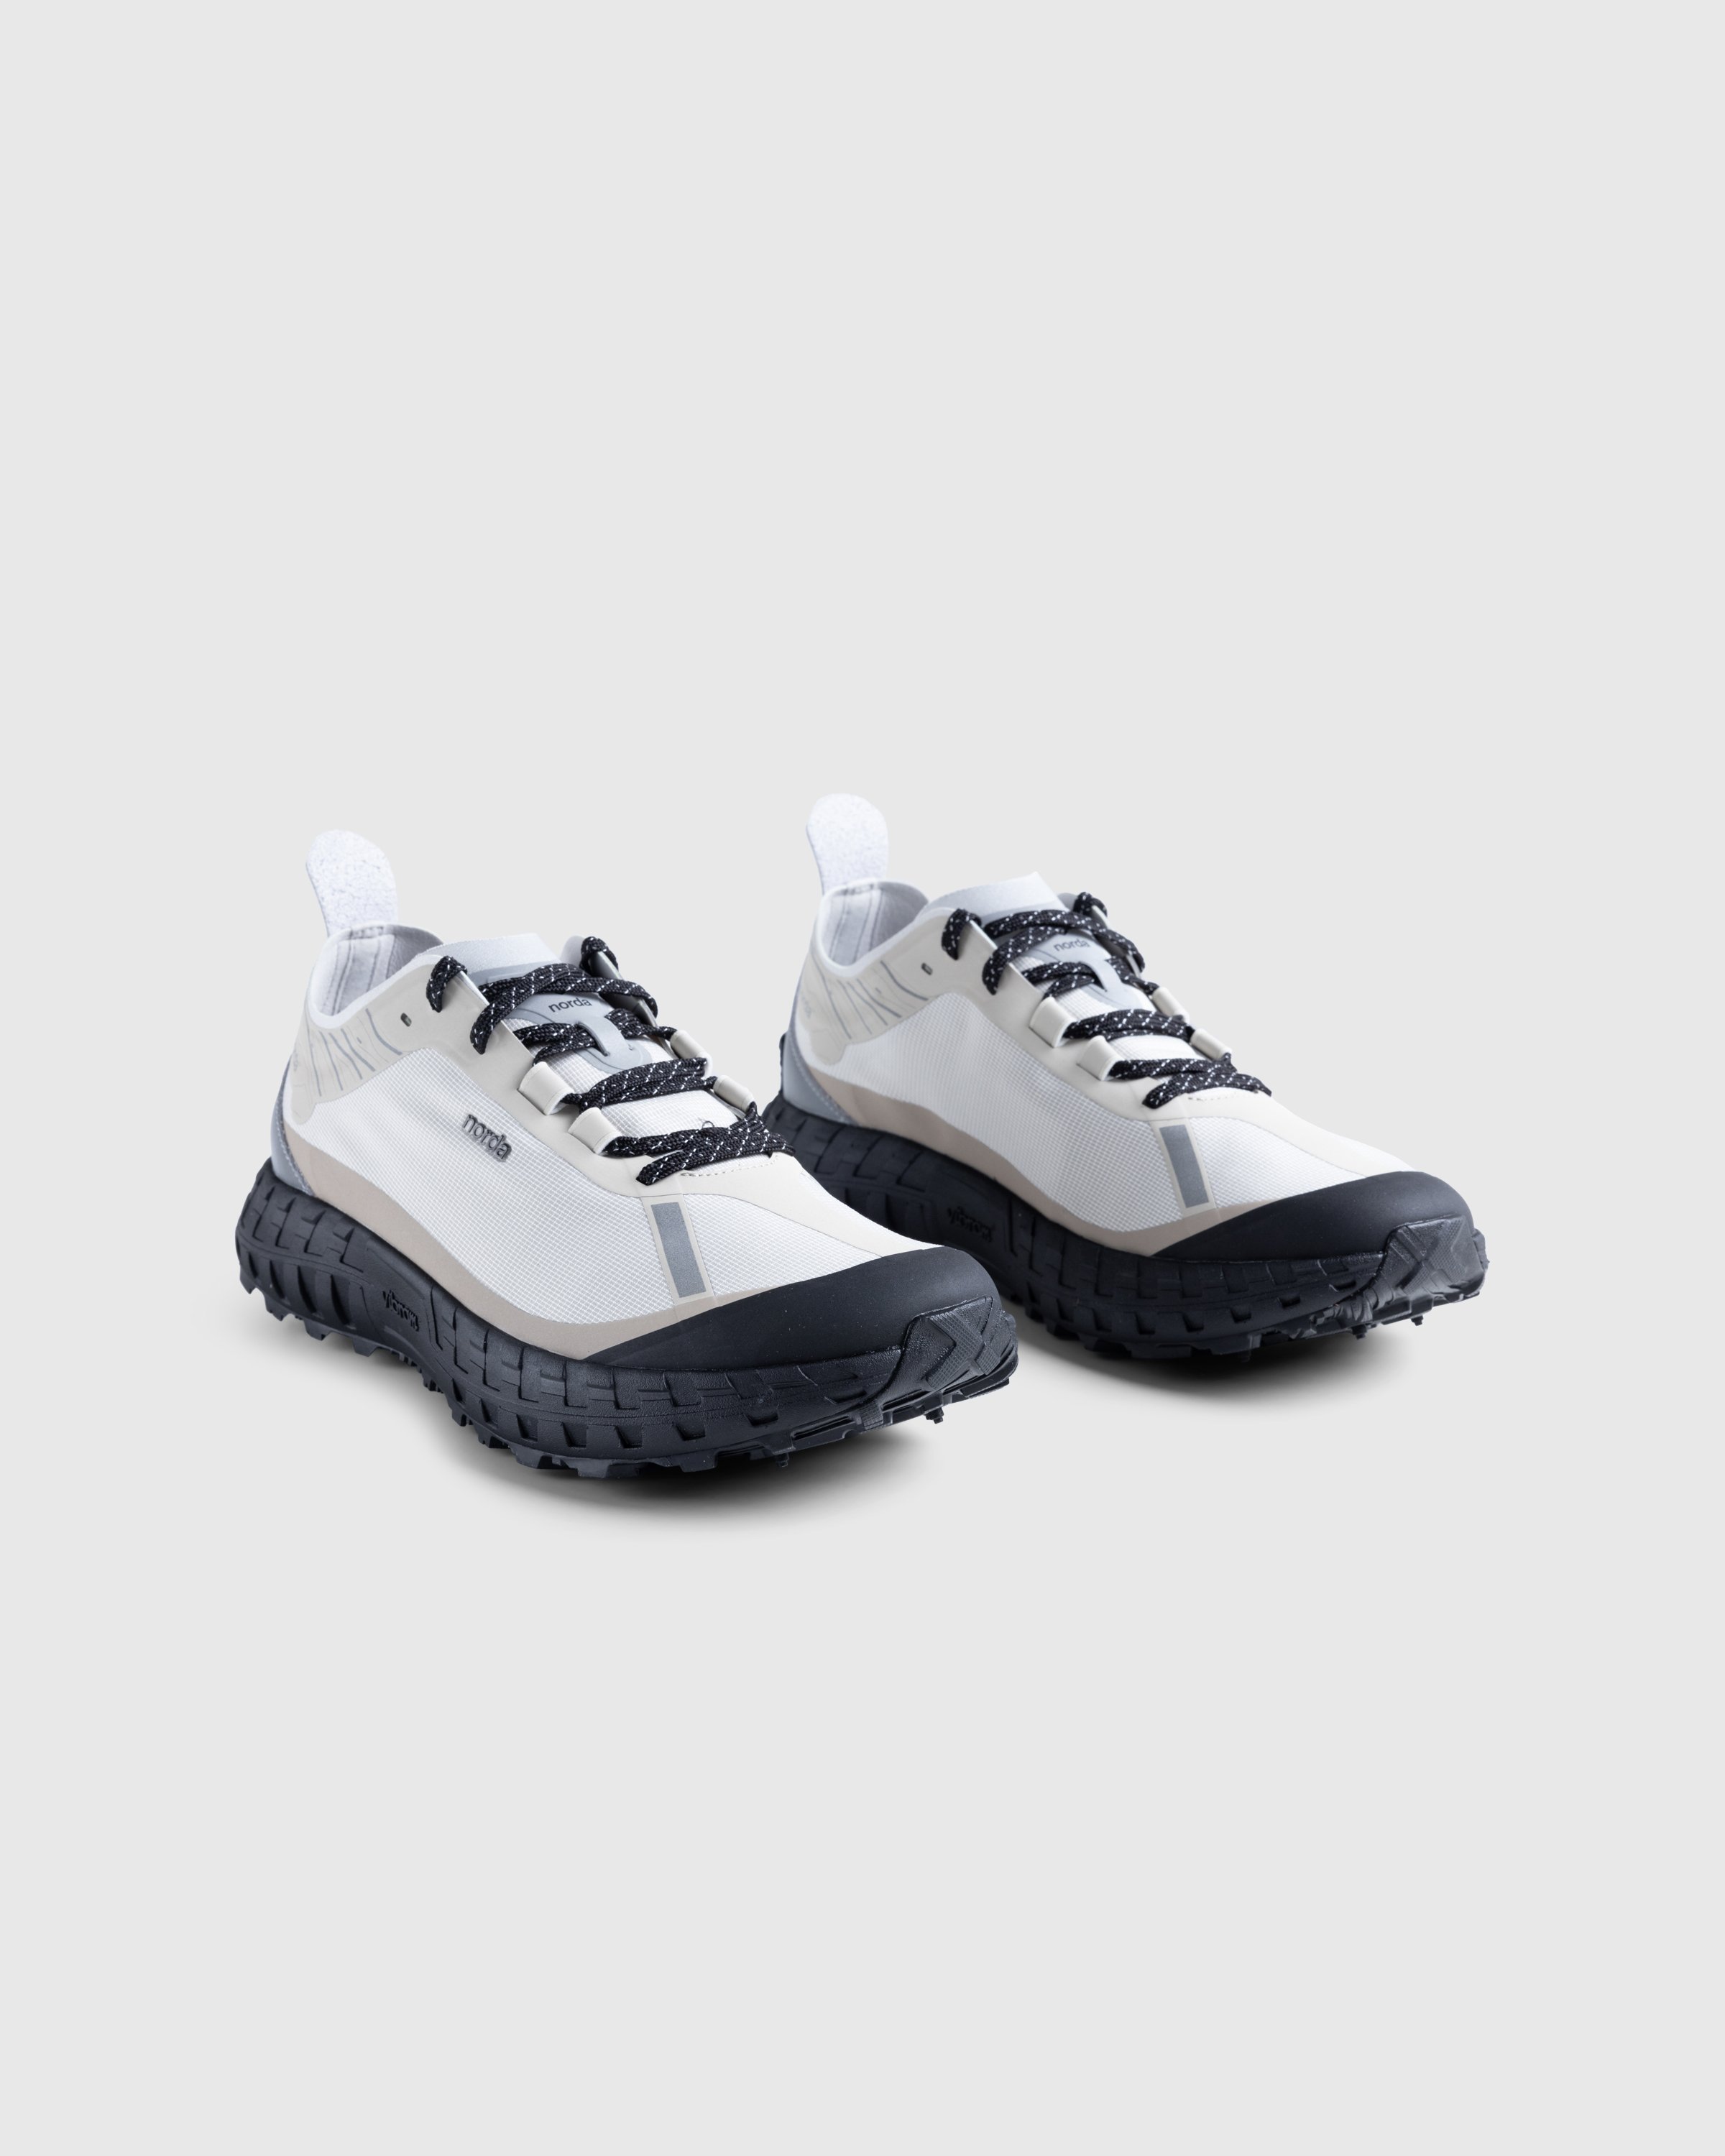 Norda - NORDA001-W - Footwear - Grey - Image 3